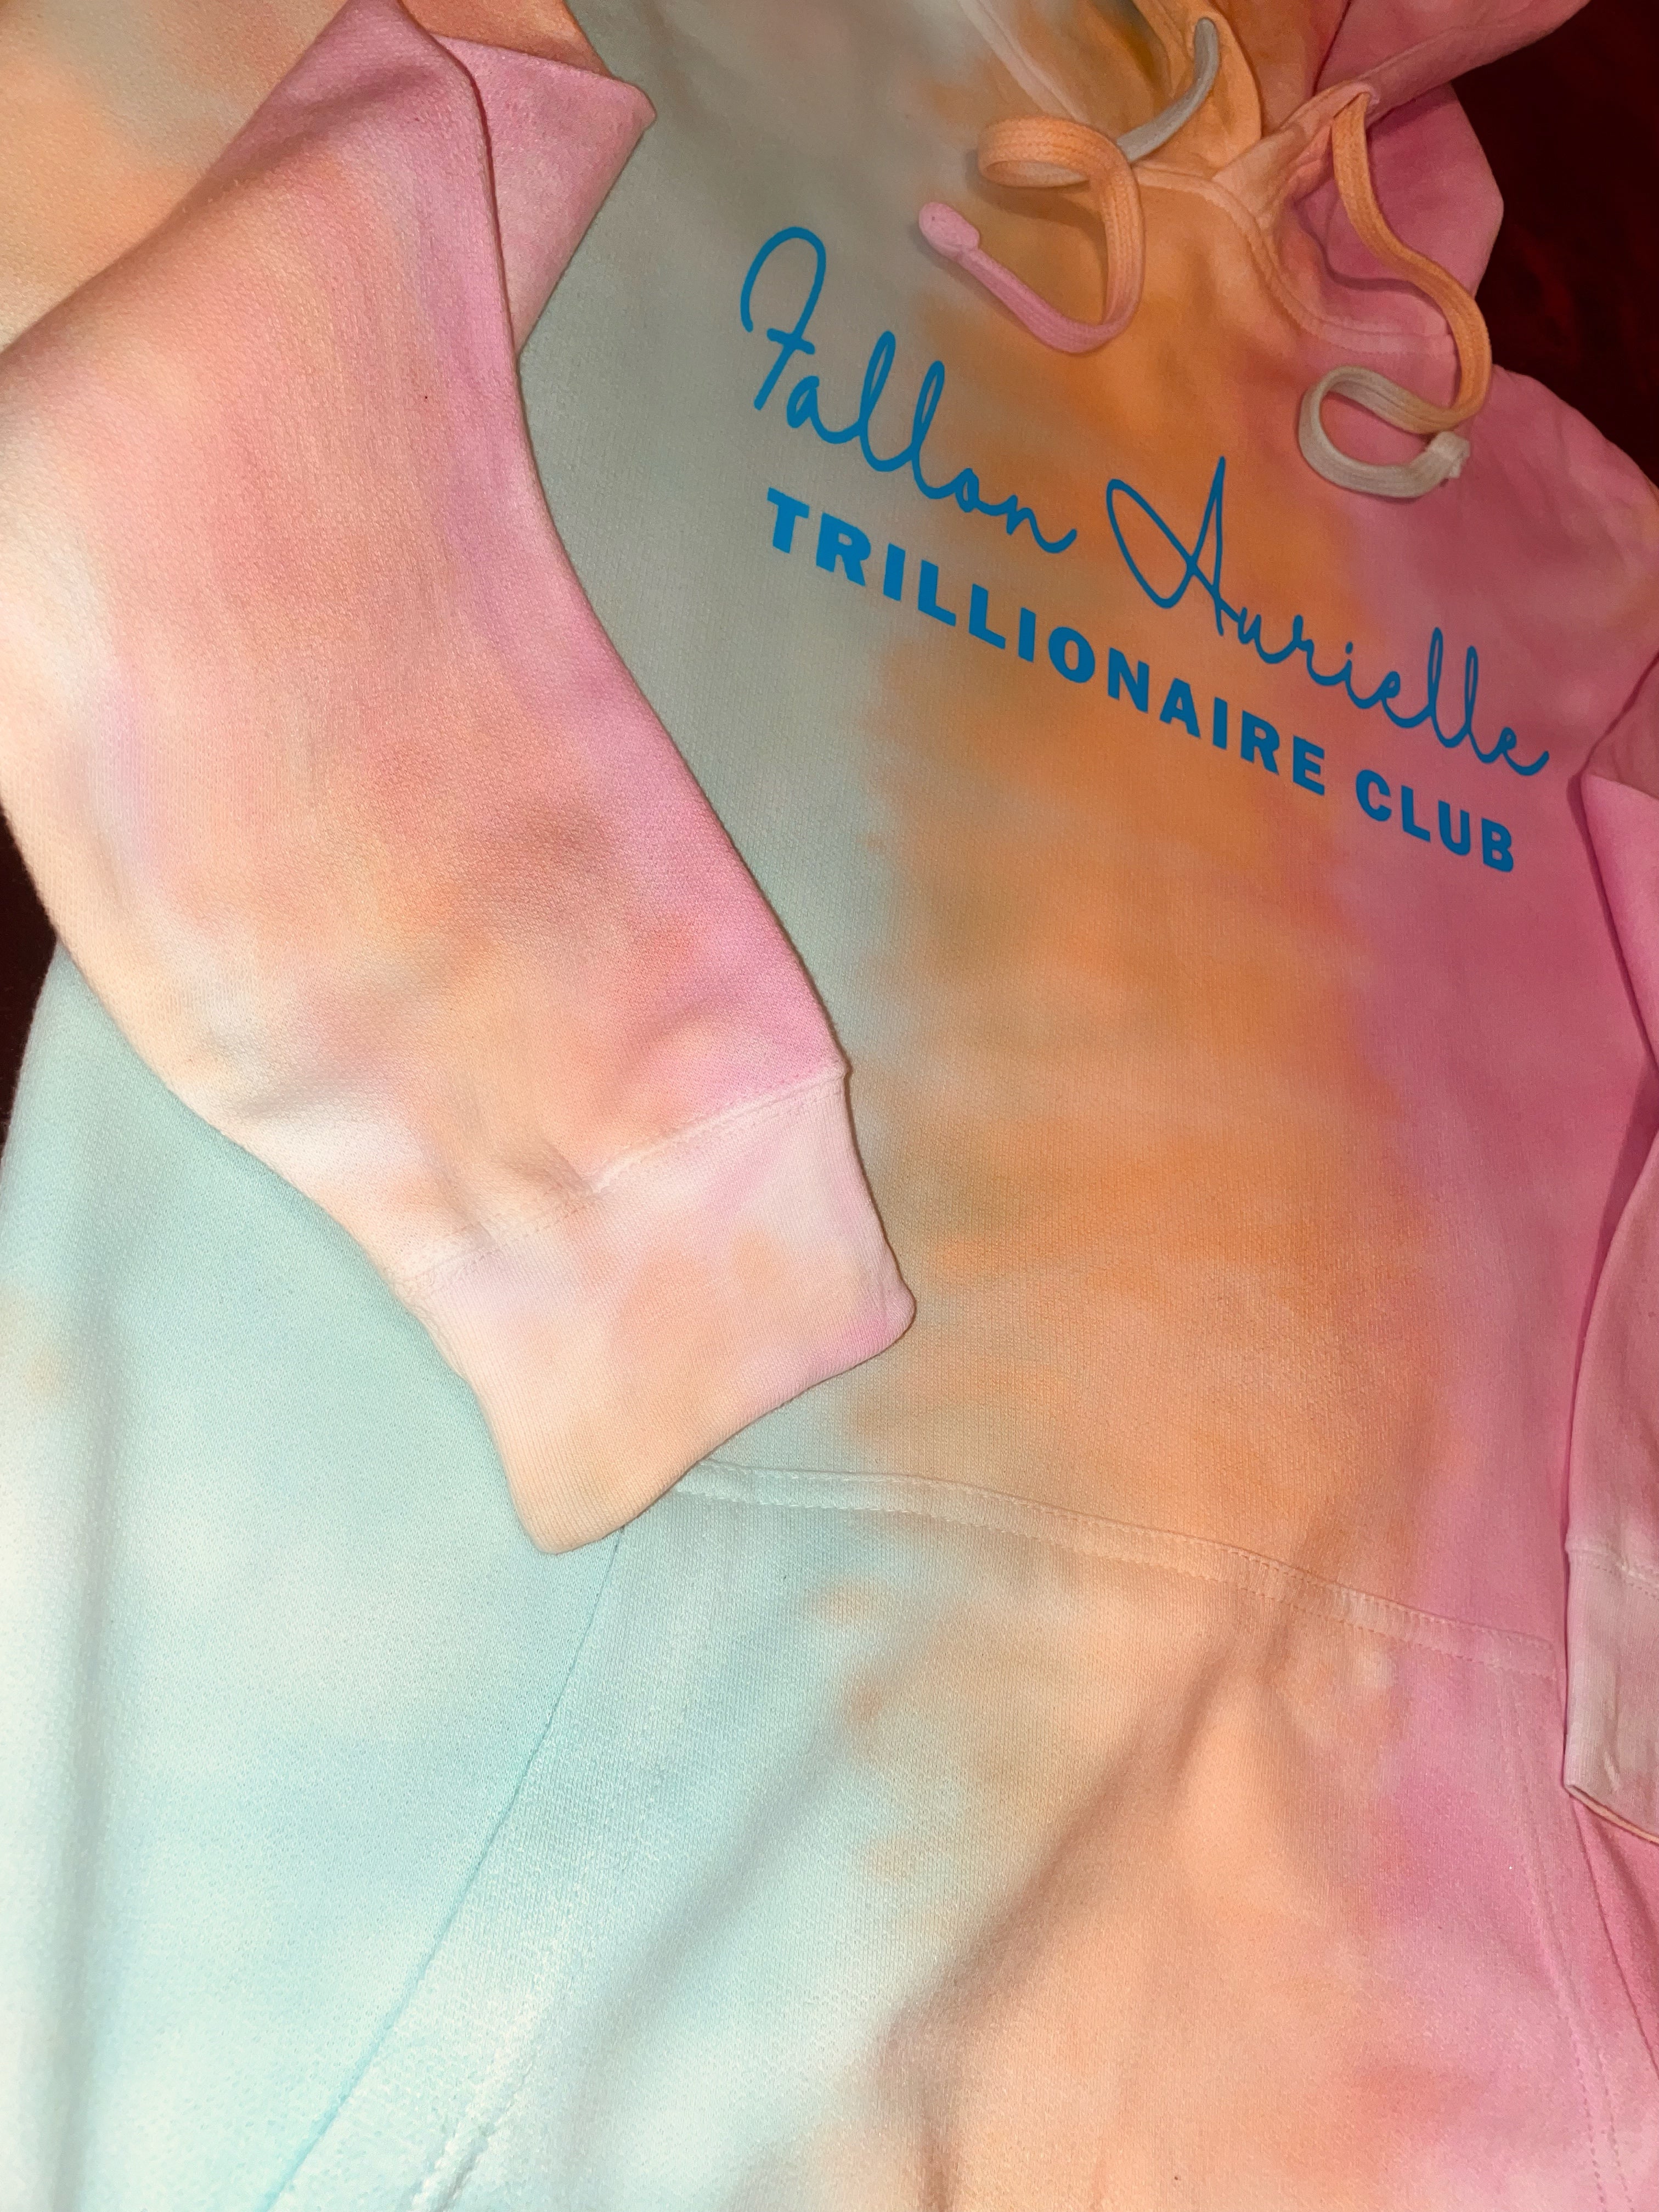 Fallon Aurielle Unisex Signature Trillionaire Club Tie Dye Hoodie (Peach, Sunrise Tie Dye & Powder Blue)